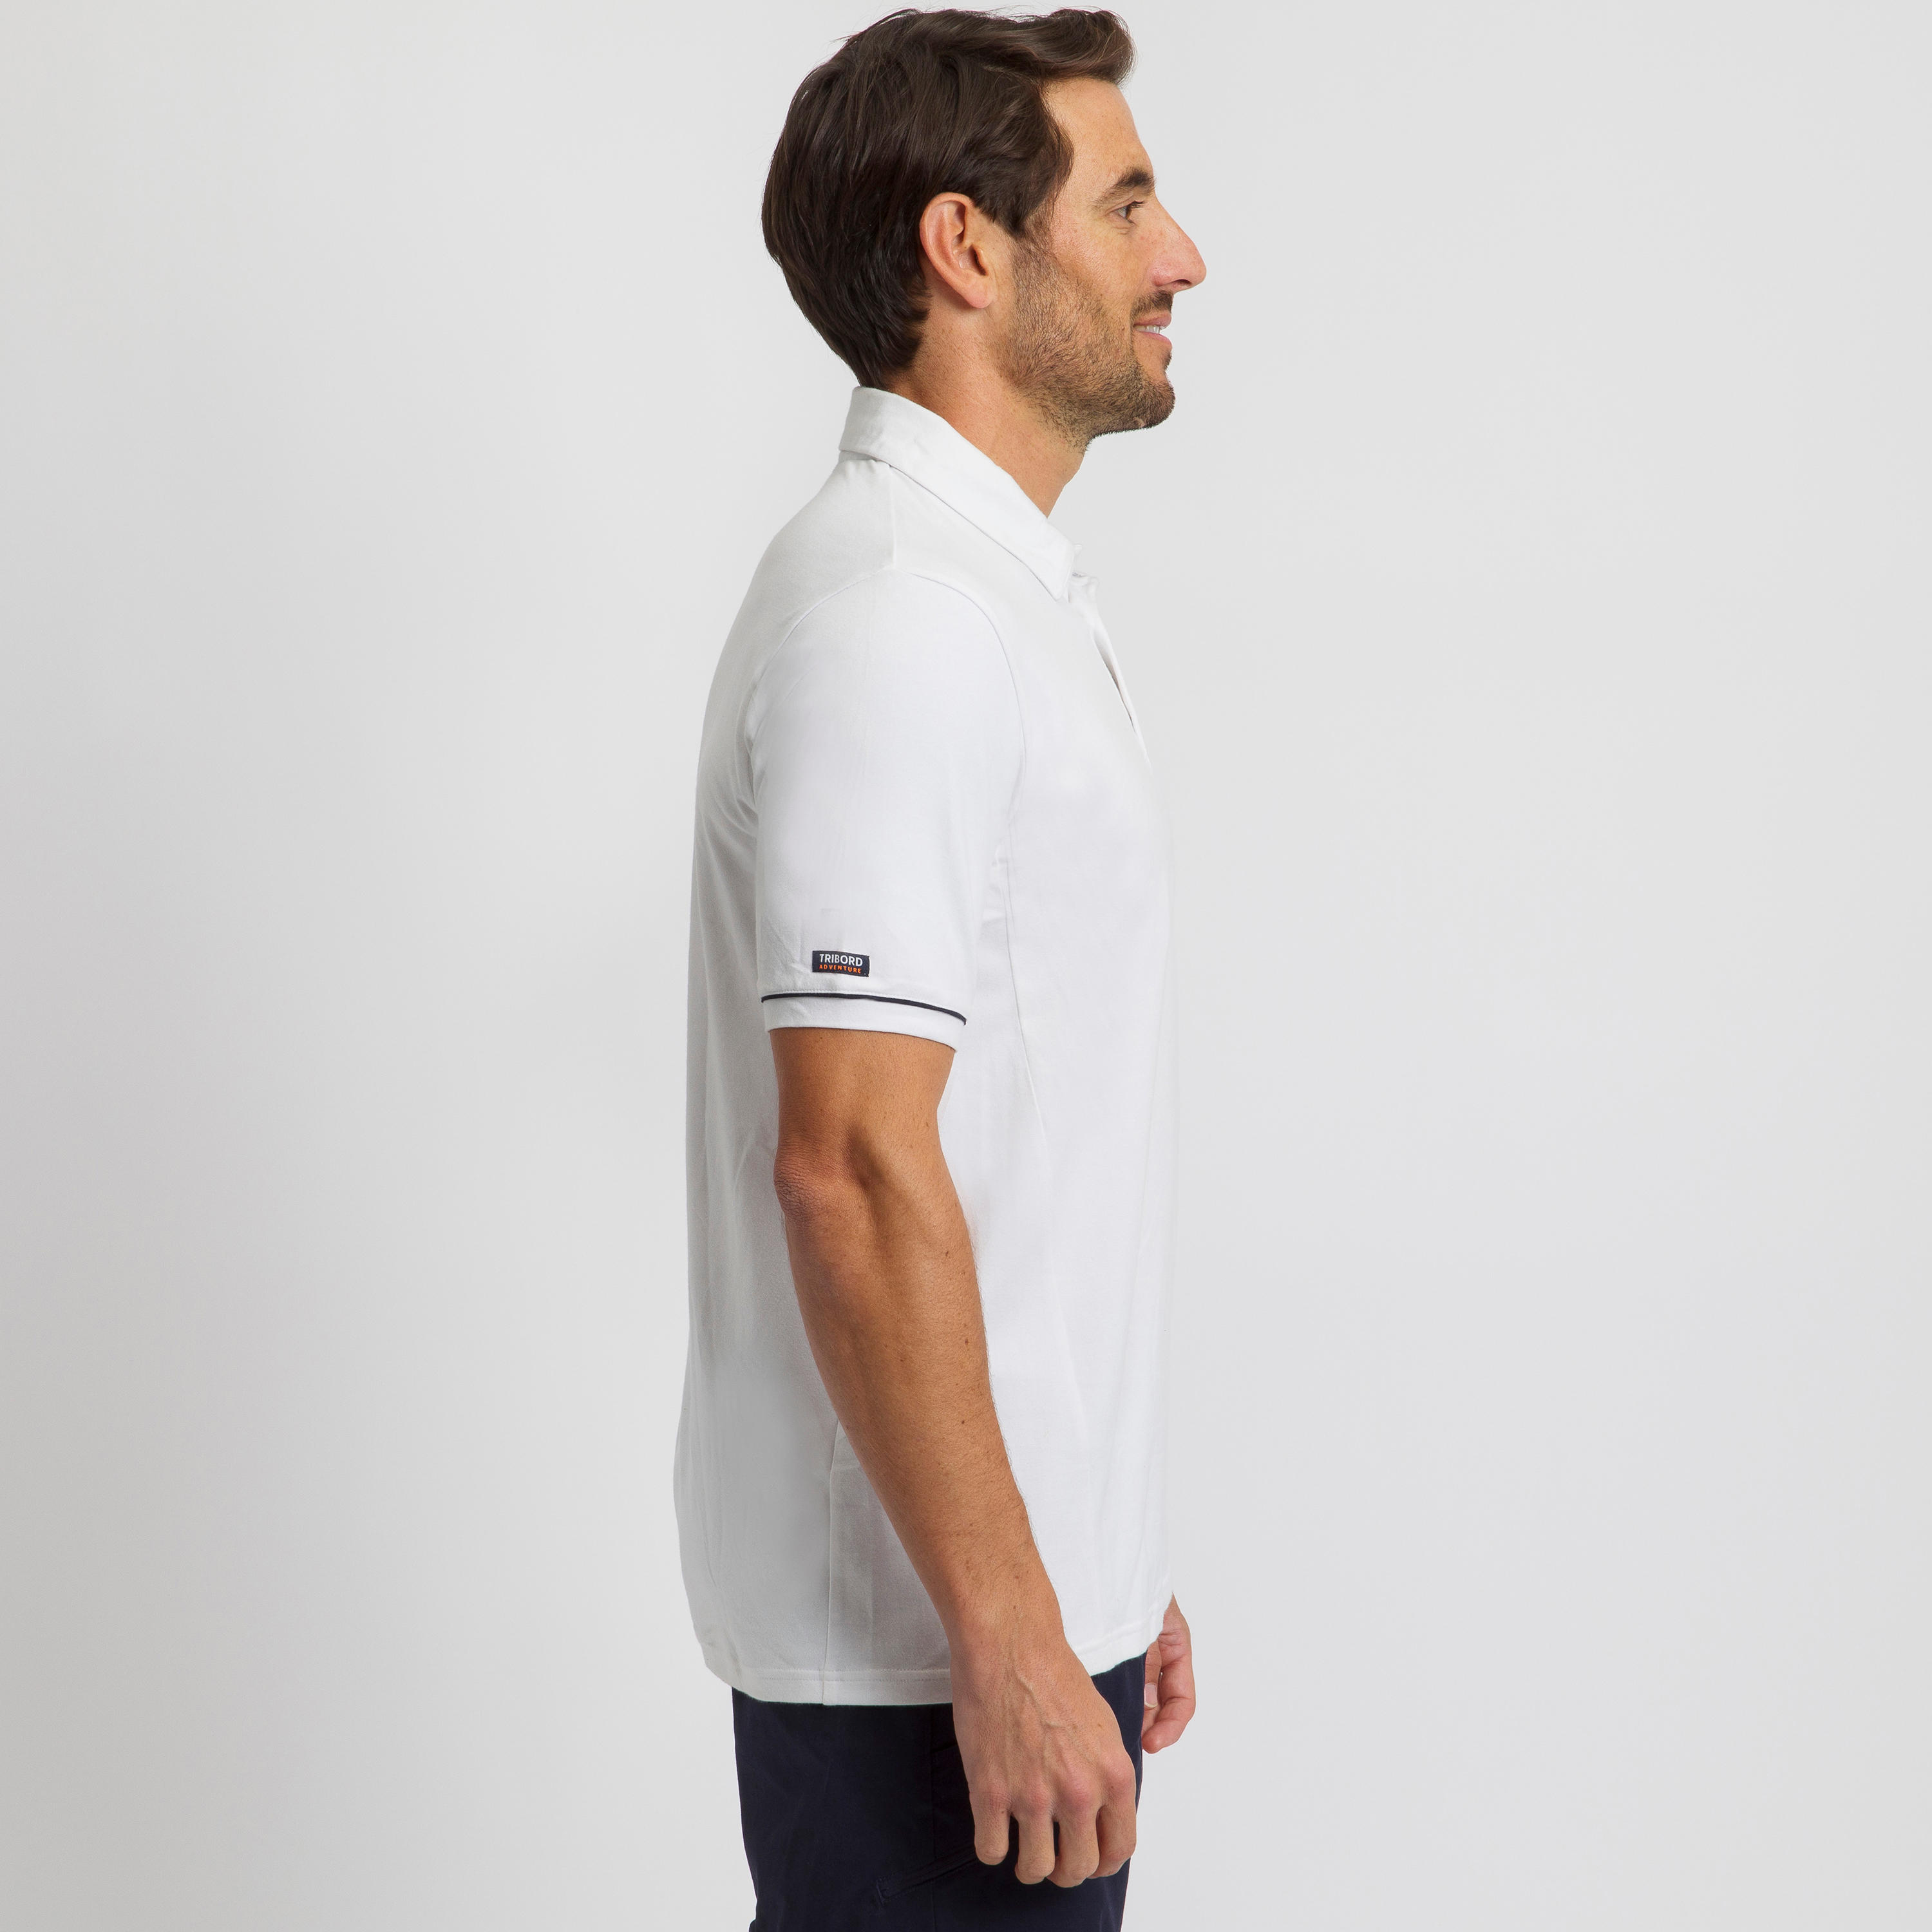 Sailing 100 Men's Sailing Short Sleeve Polo Shirt - White 3/7